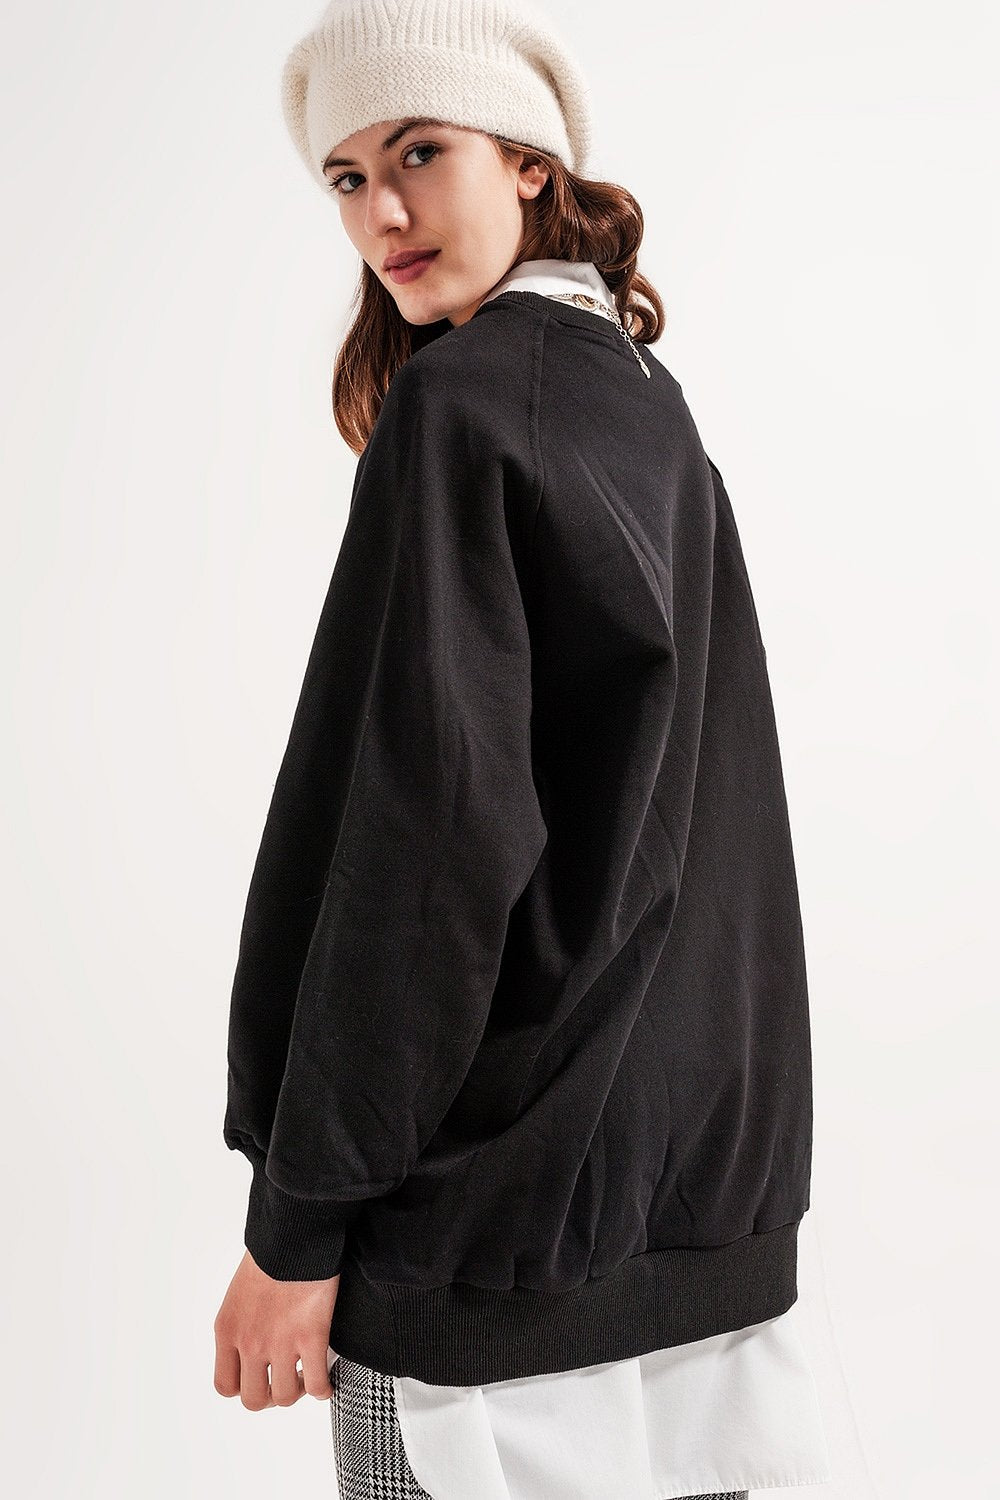 Super Oversized Sweatshirt With Seam Detail in Black